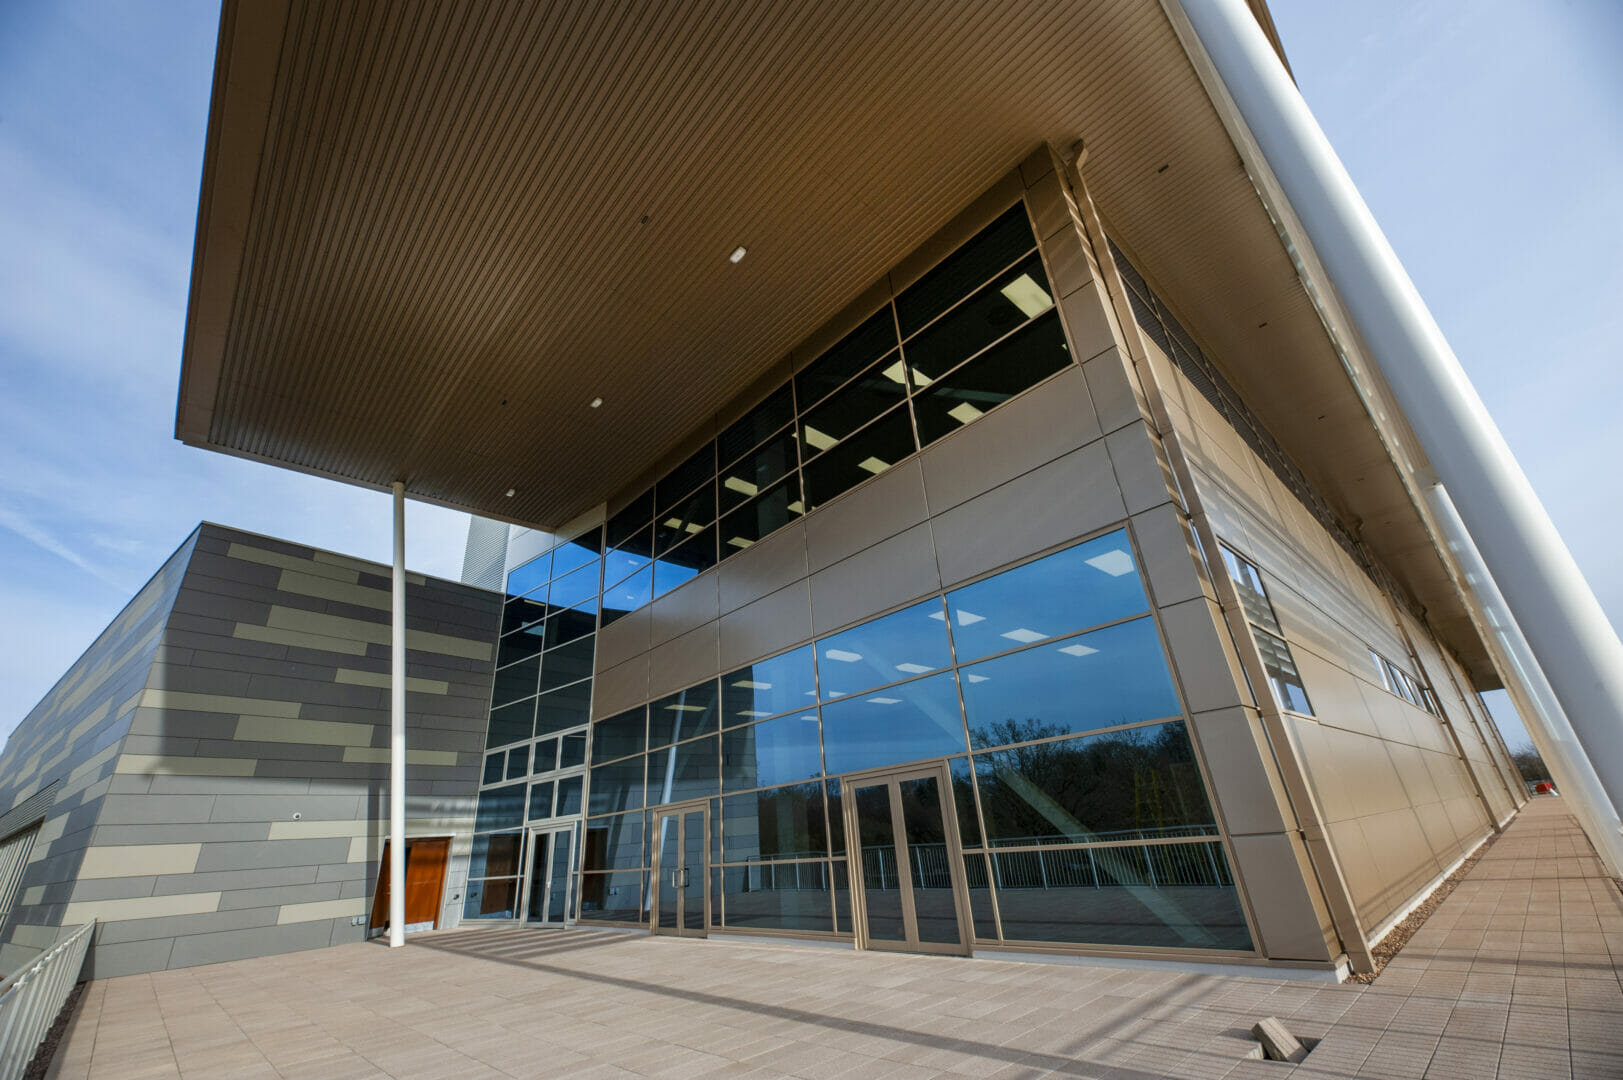 Waterloo delivers fresh air to new £50m sports hub at the University of Warwick   @WaterlooHVAC   @warwickuni